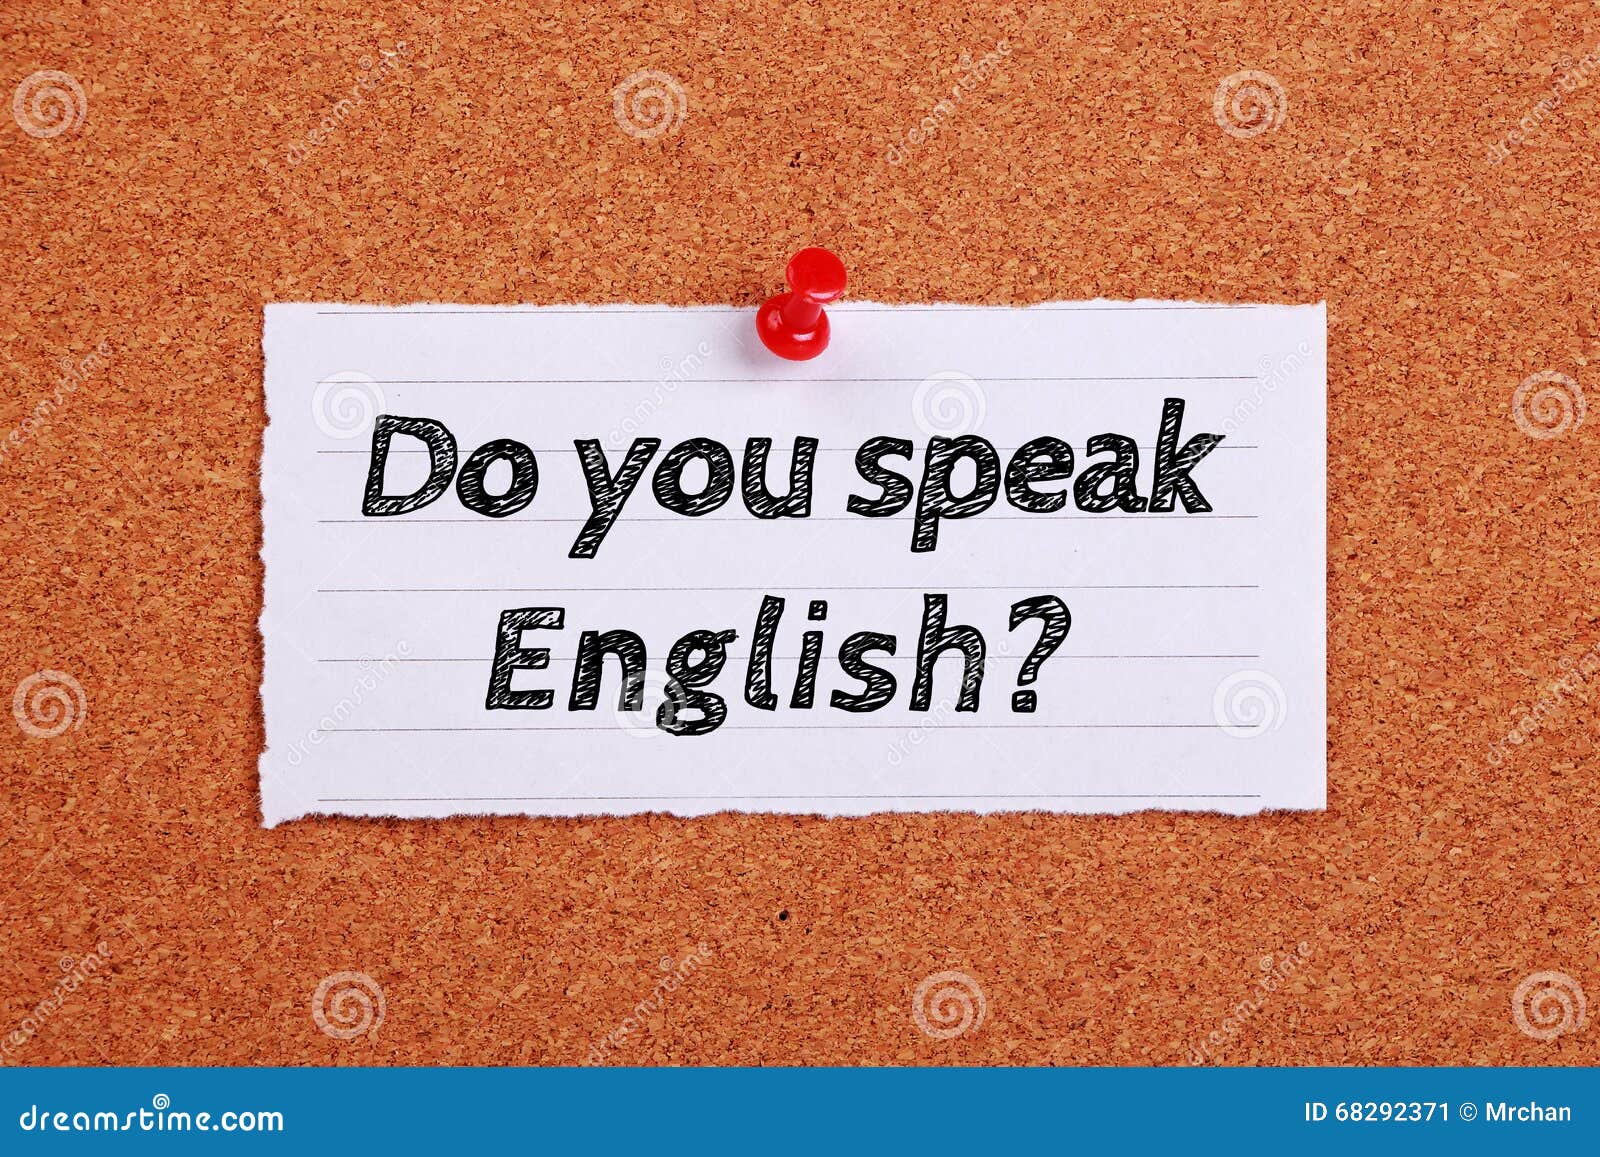 Do you speak good english. Speak English. Был you speak English. Do you speak English конечно. Do you speak English картинки.